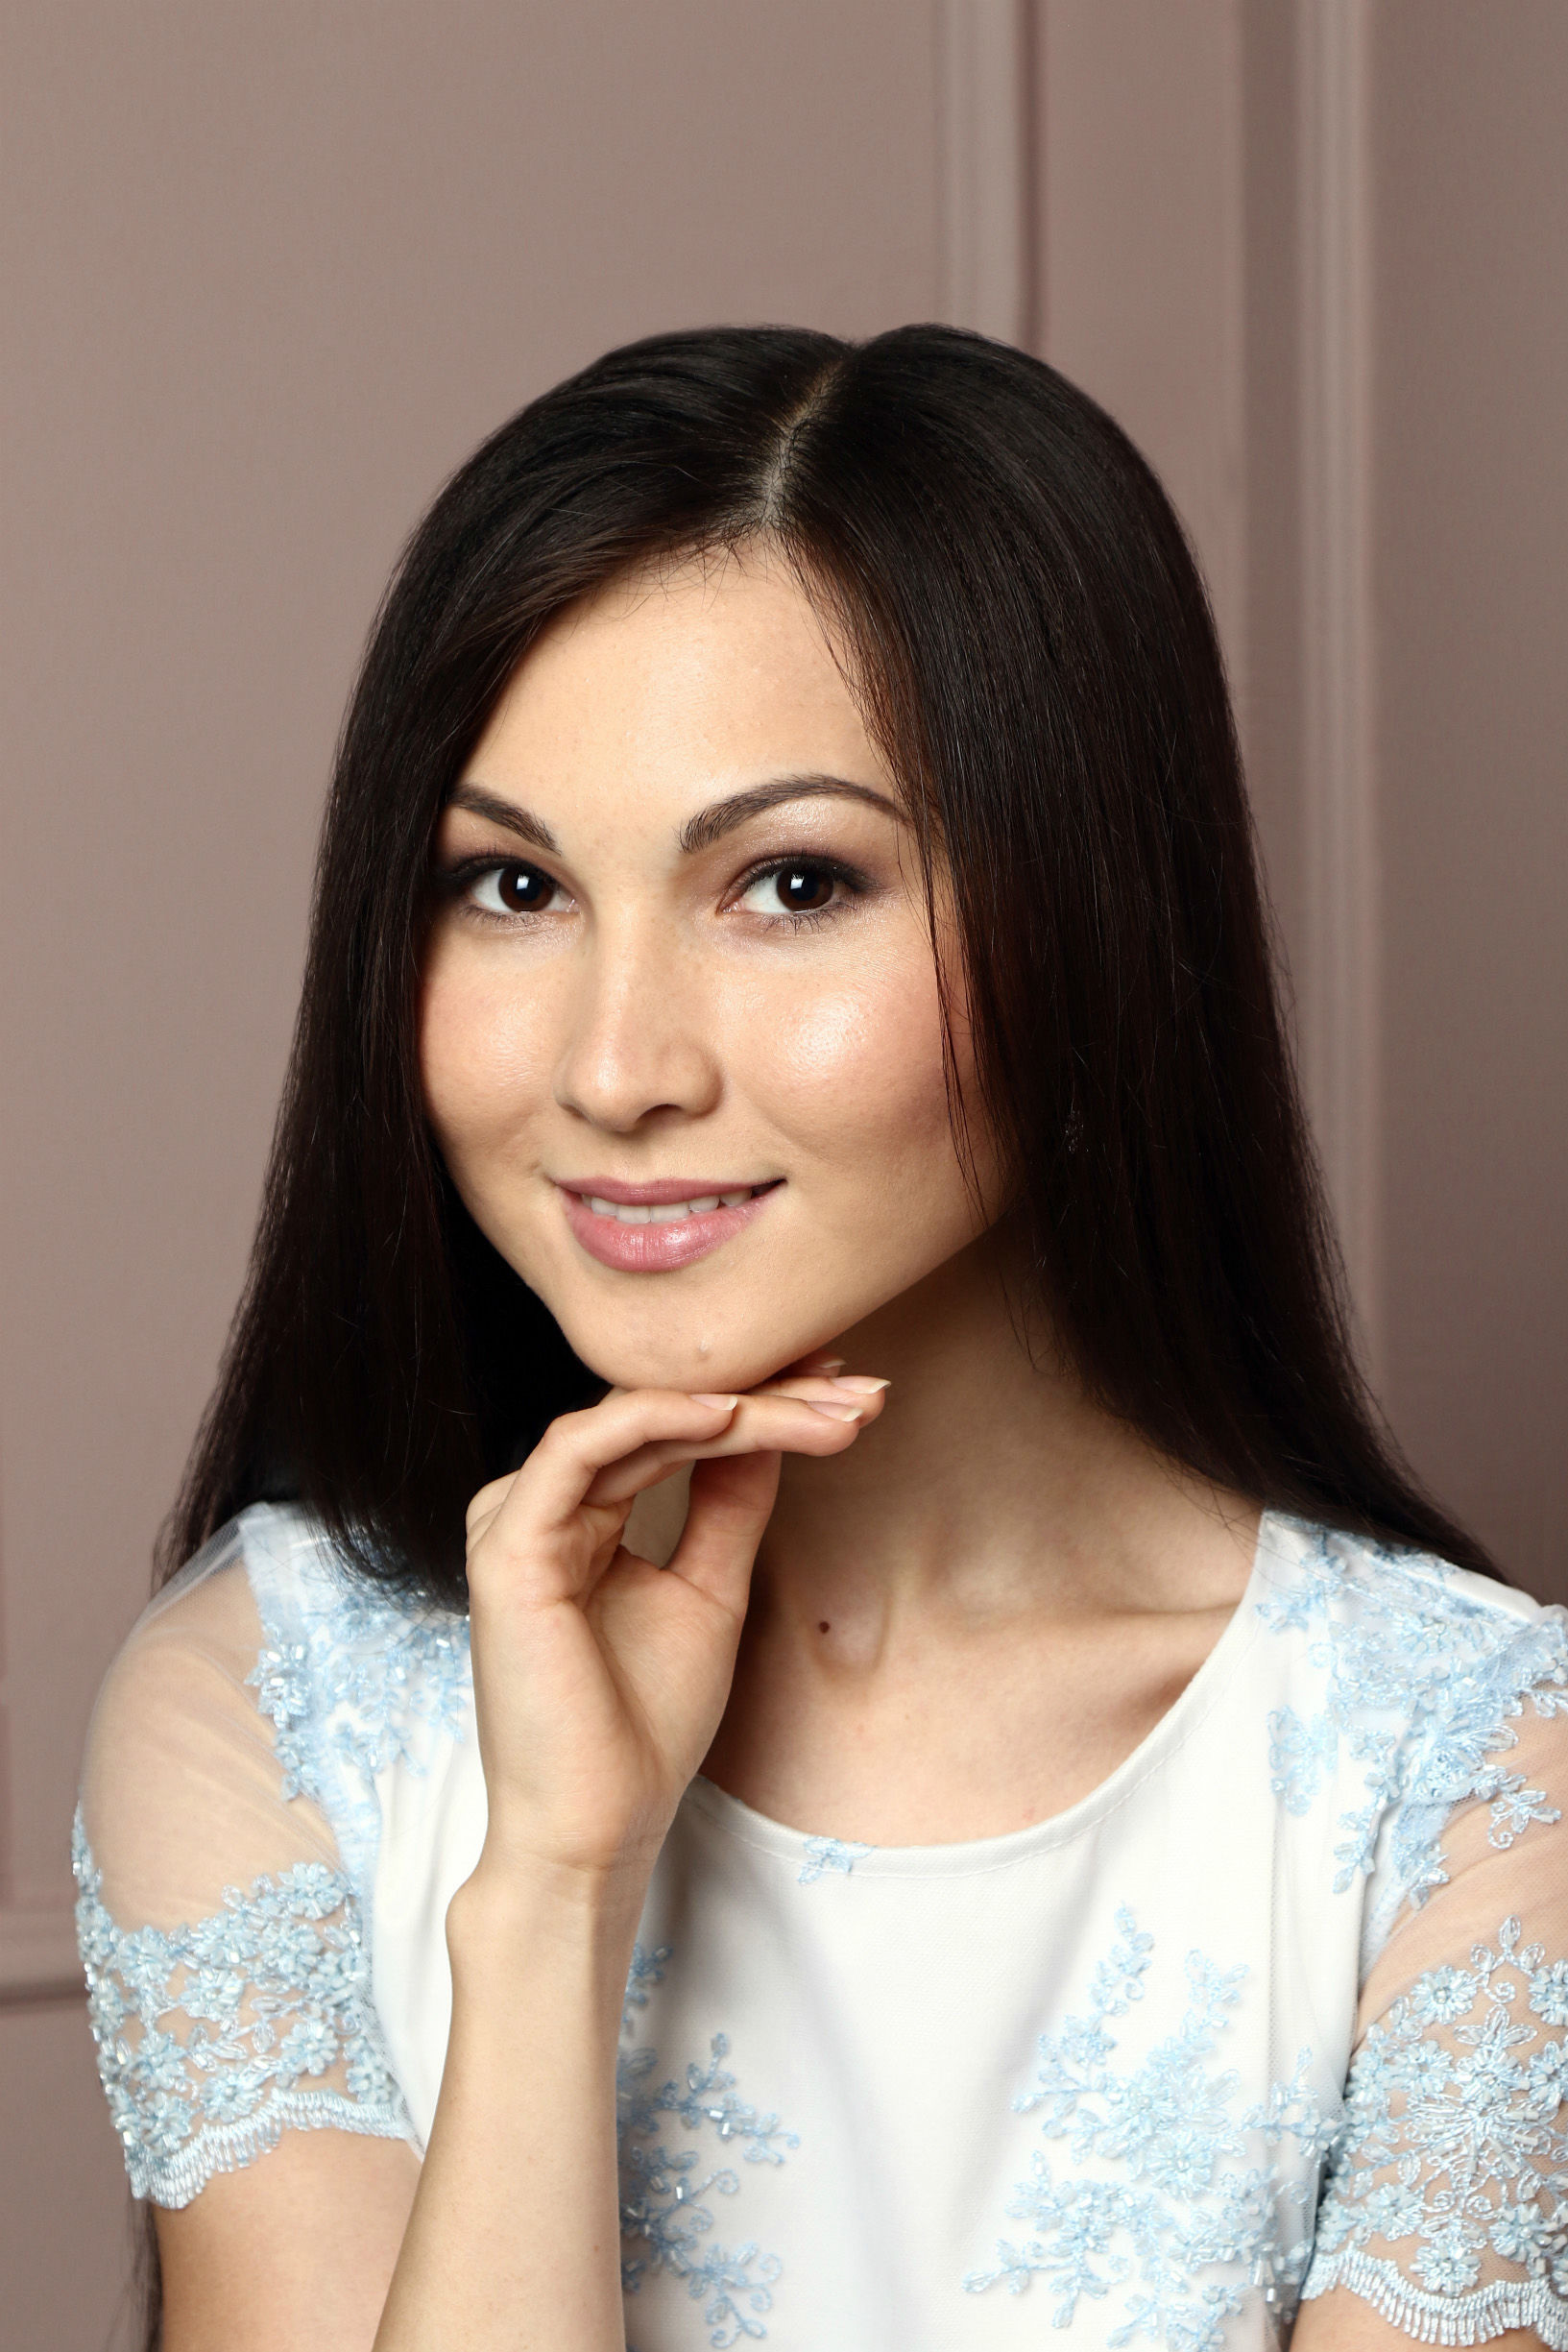 Нәфисә Назарова: “Оптимист булсам да, елак мин”